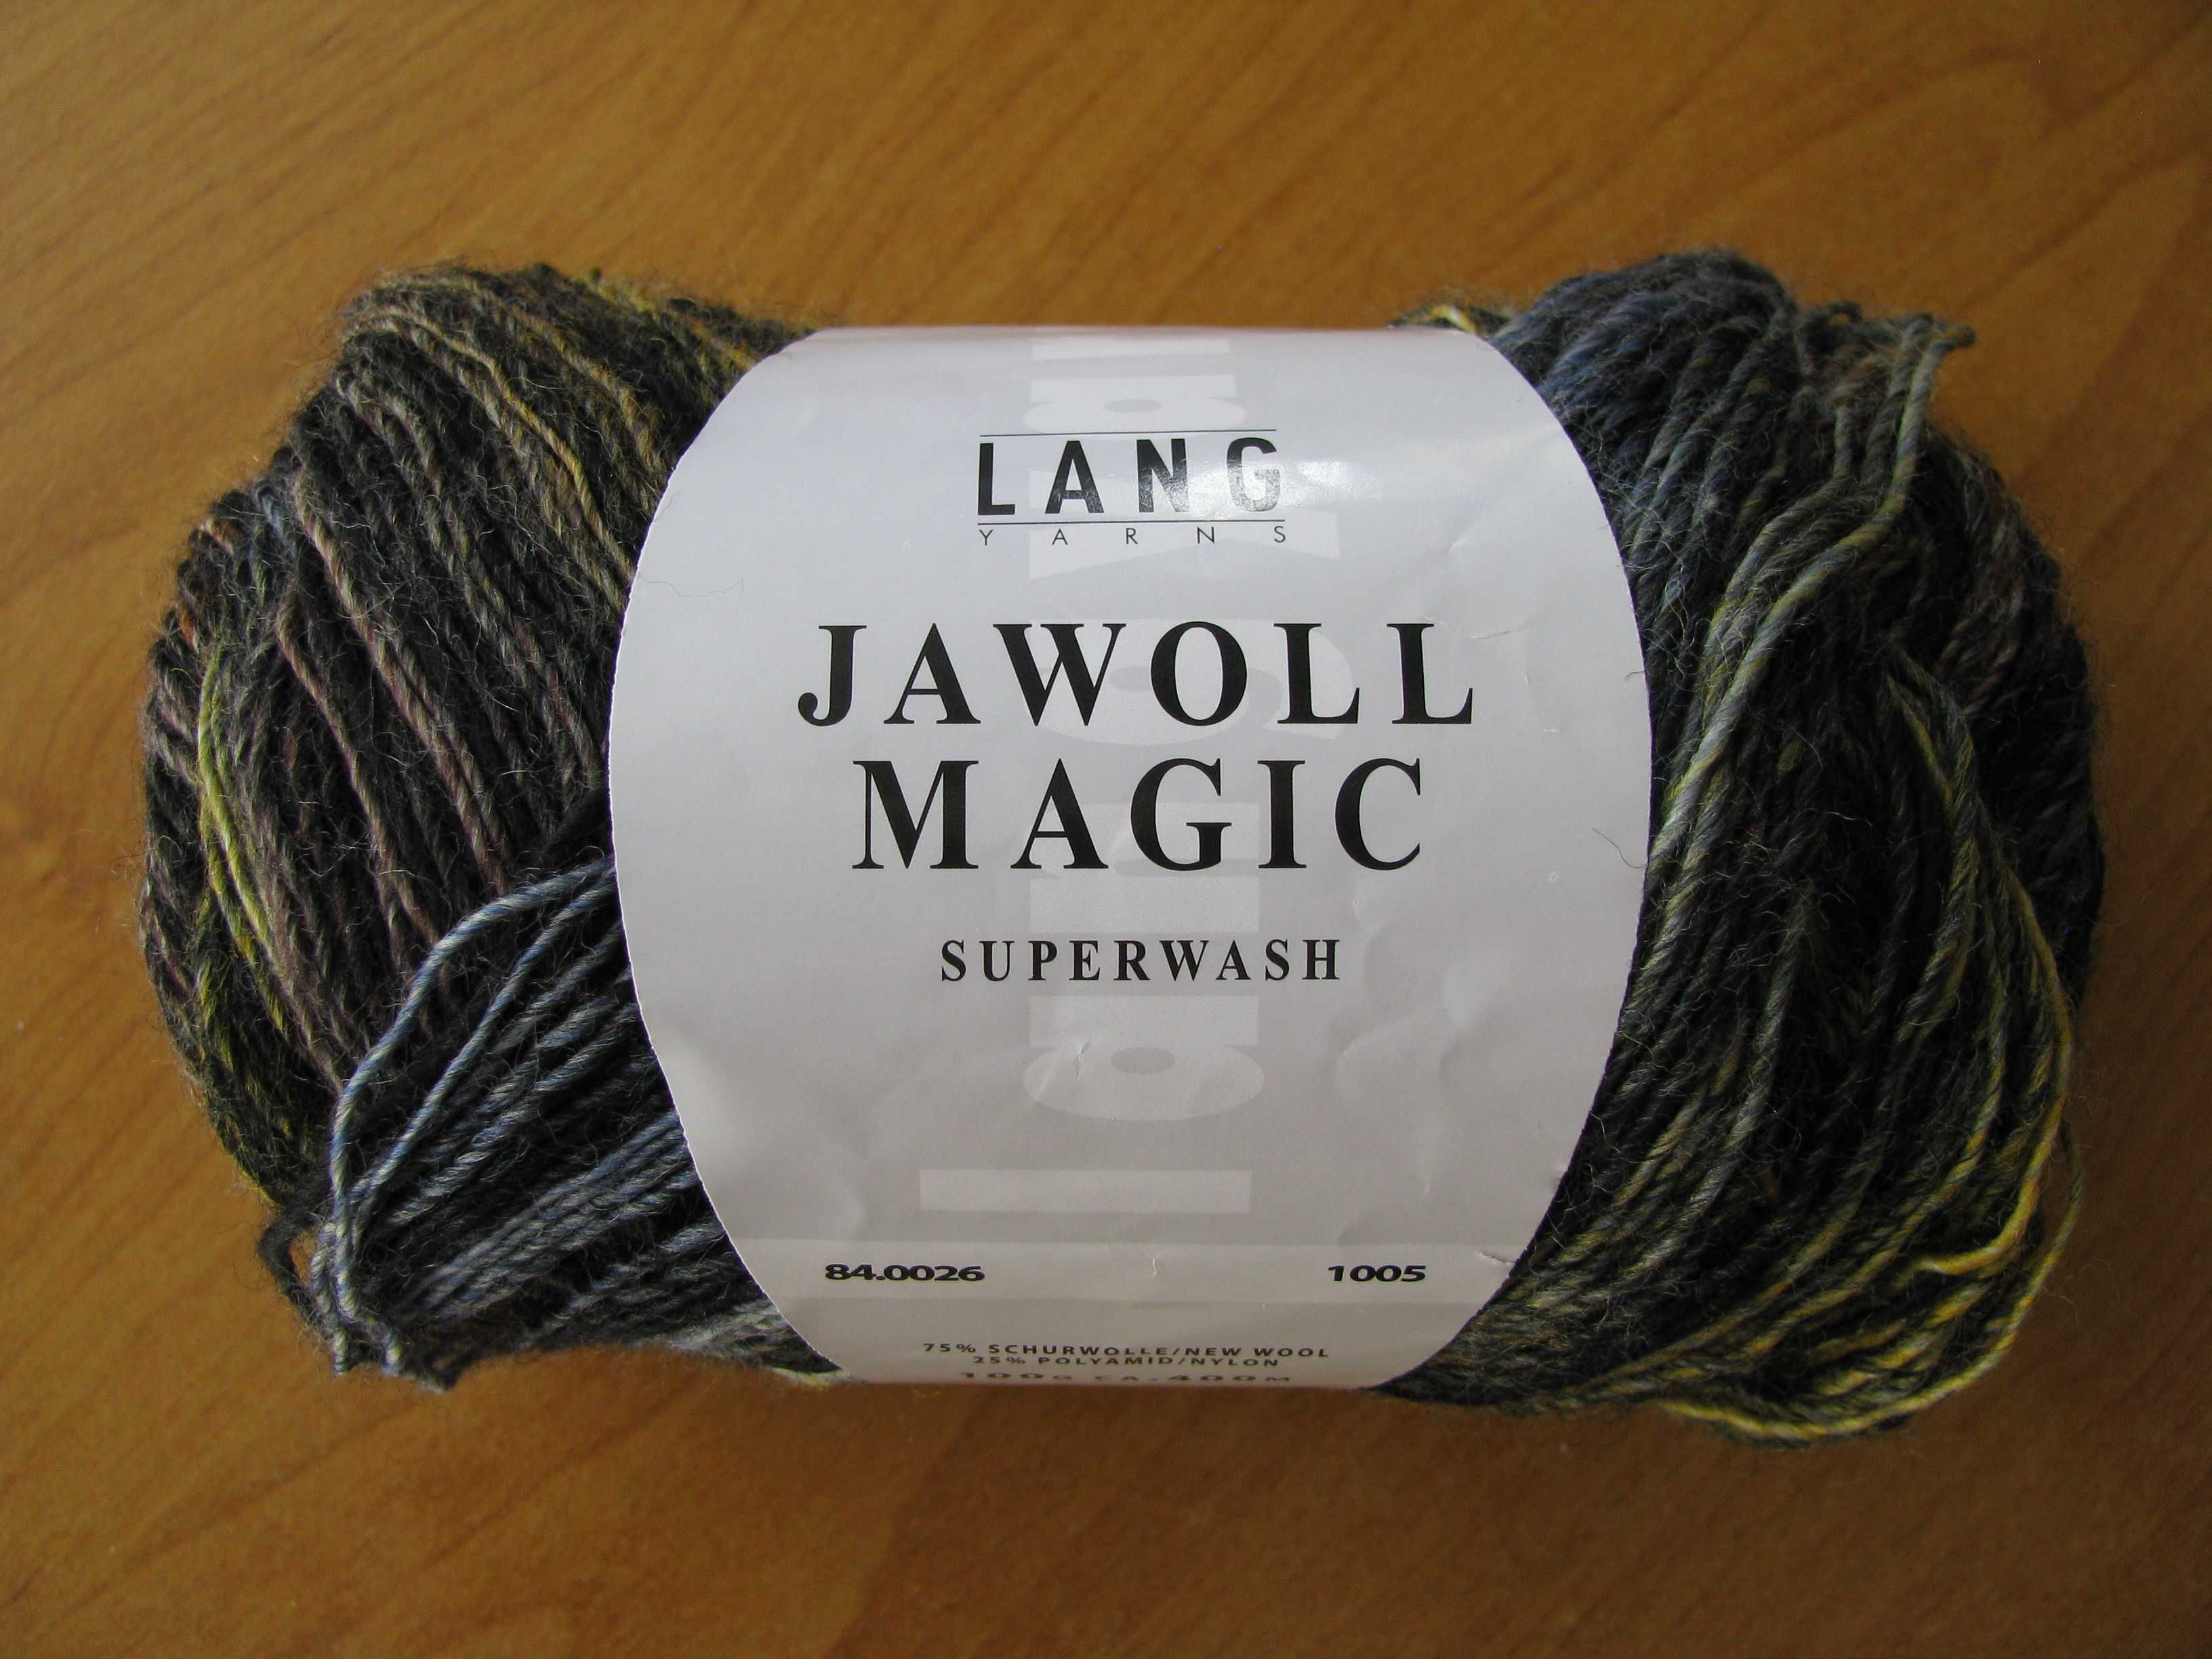 włóczka Jawoll Magic firmy Lang Yarns - kolor nr 84.0026